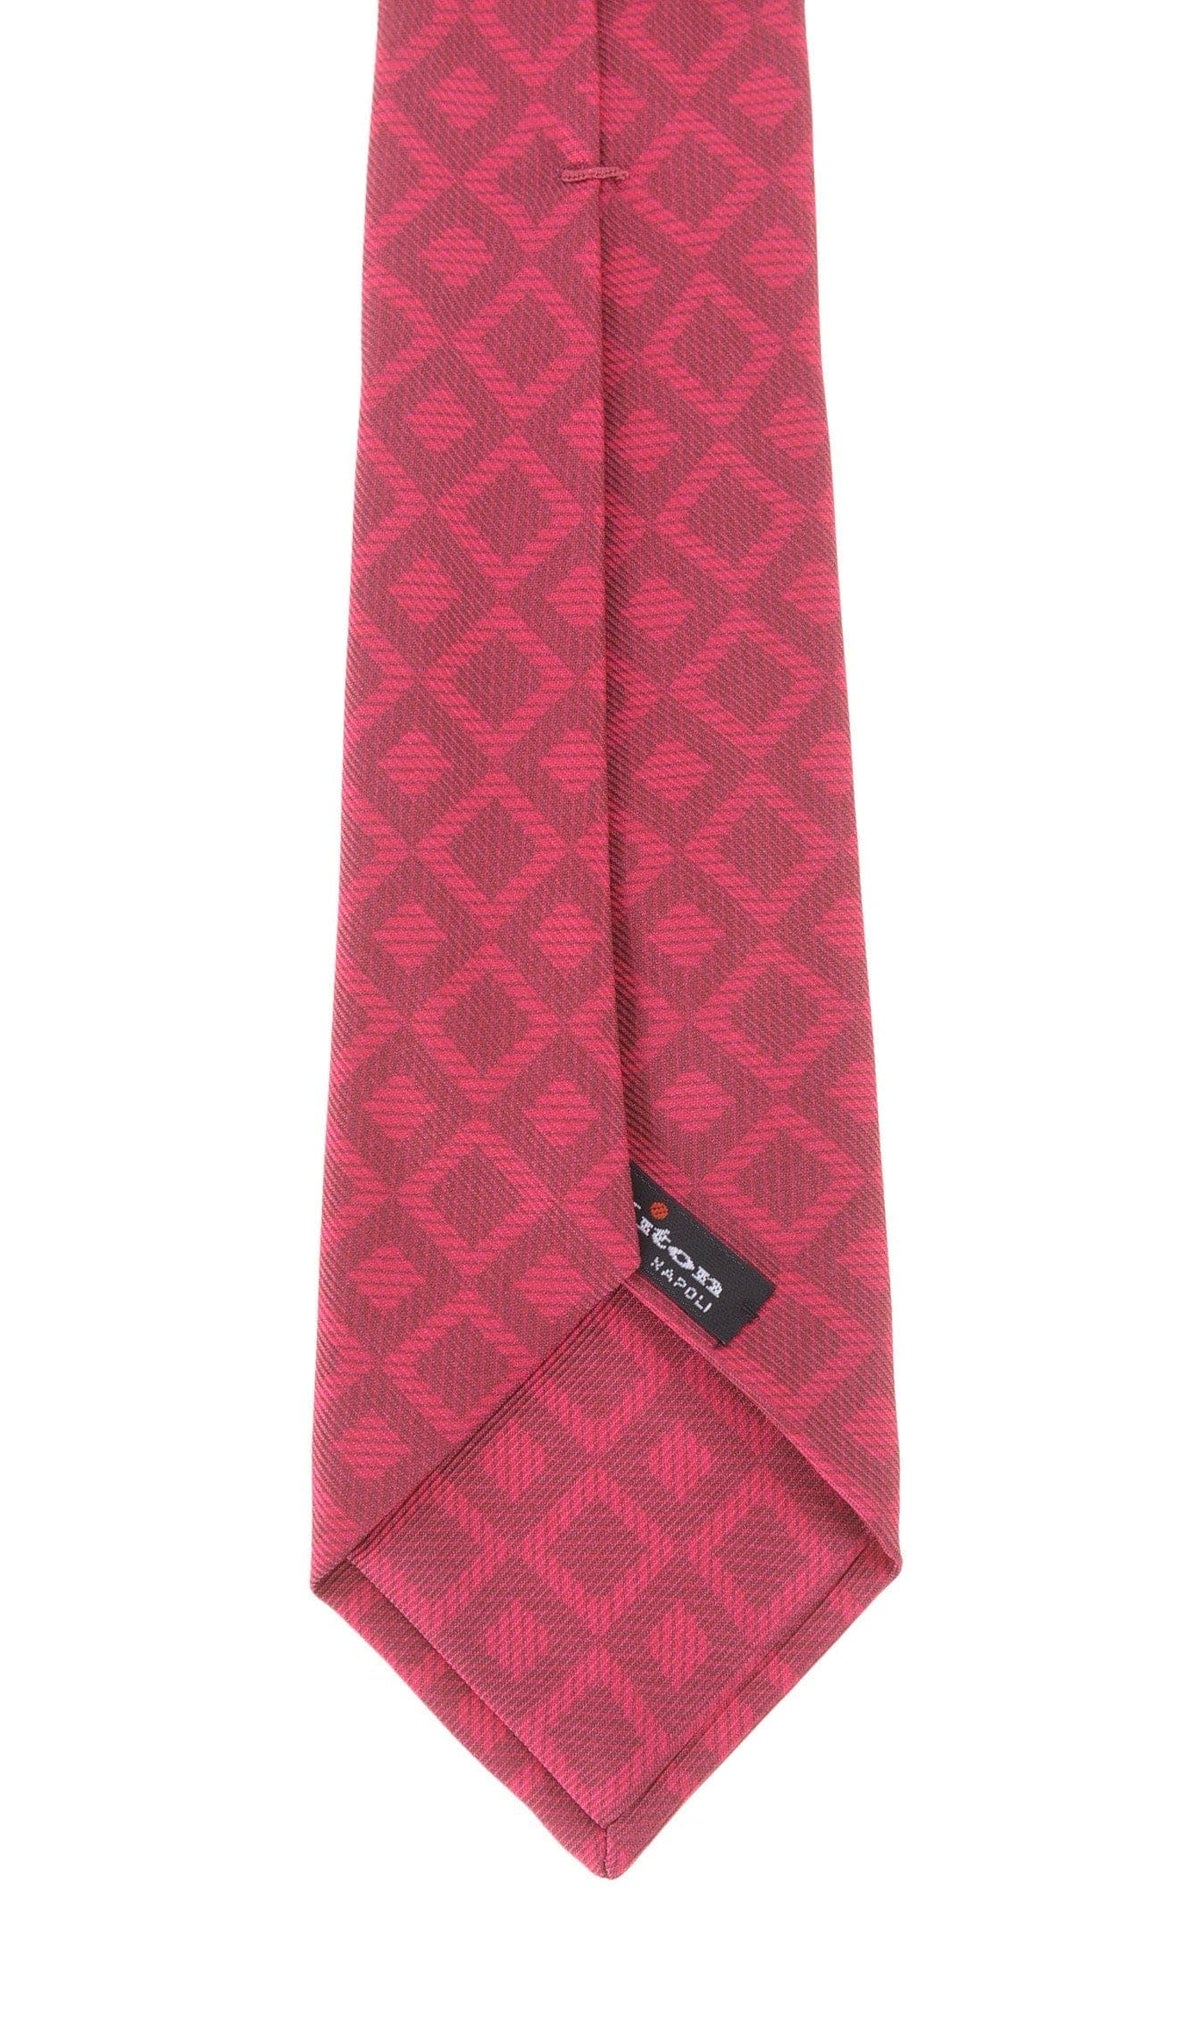 Kiton Napoli Red With White Gold Diamond Motif Seven Fold Handmade Silk Necktie - The Suit Depot